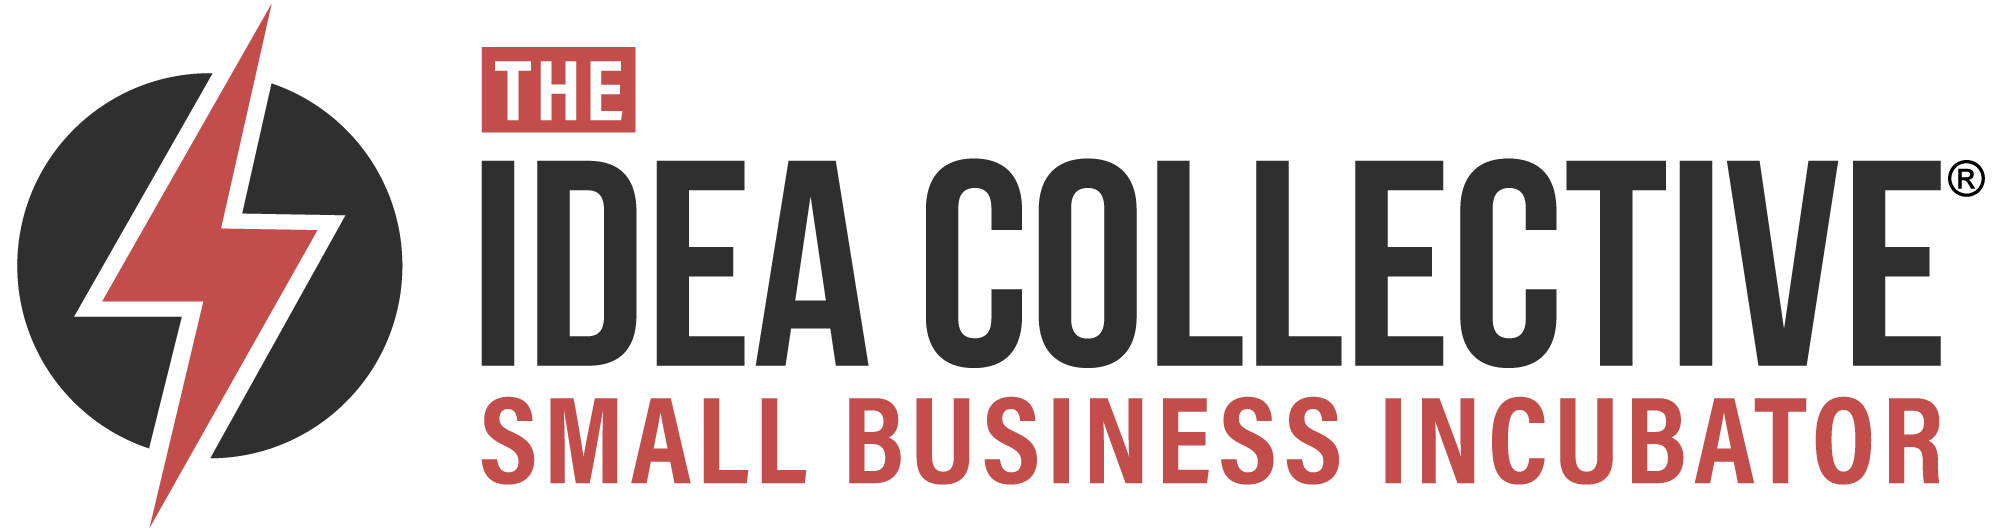 The Idea Collective Small Business Incubator